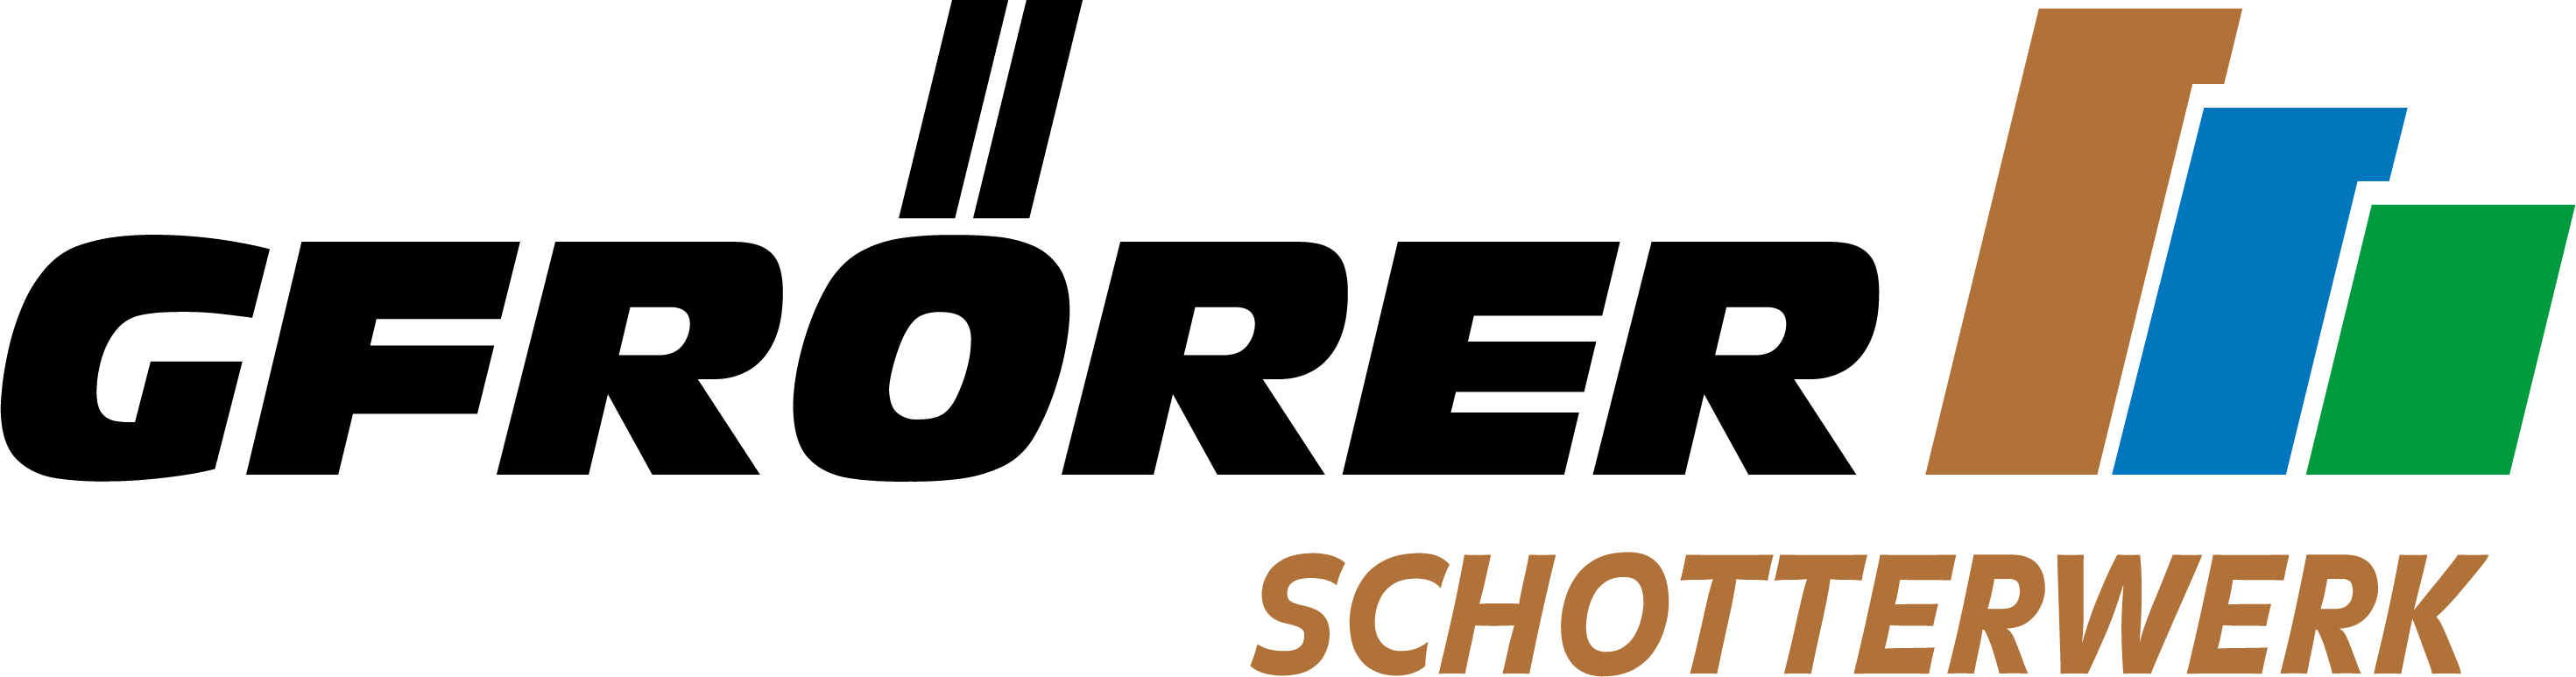 Erhard Gfrörer & Sohn Schotterwerk GmbH & Co. KG logo